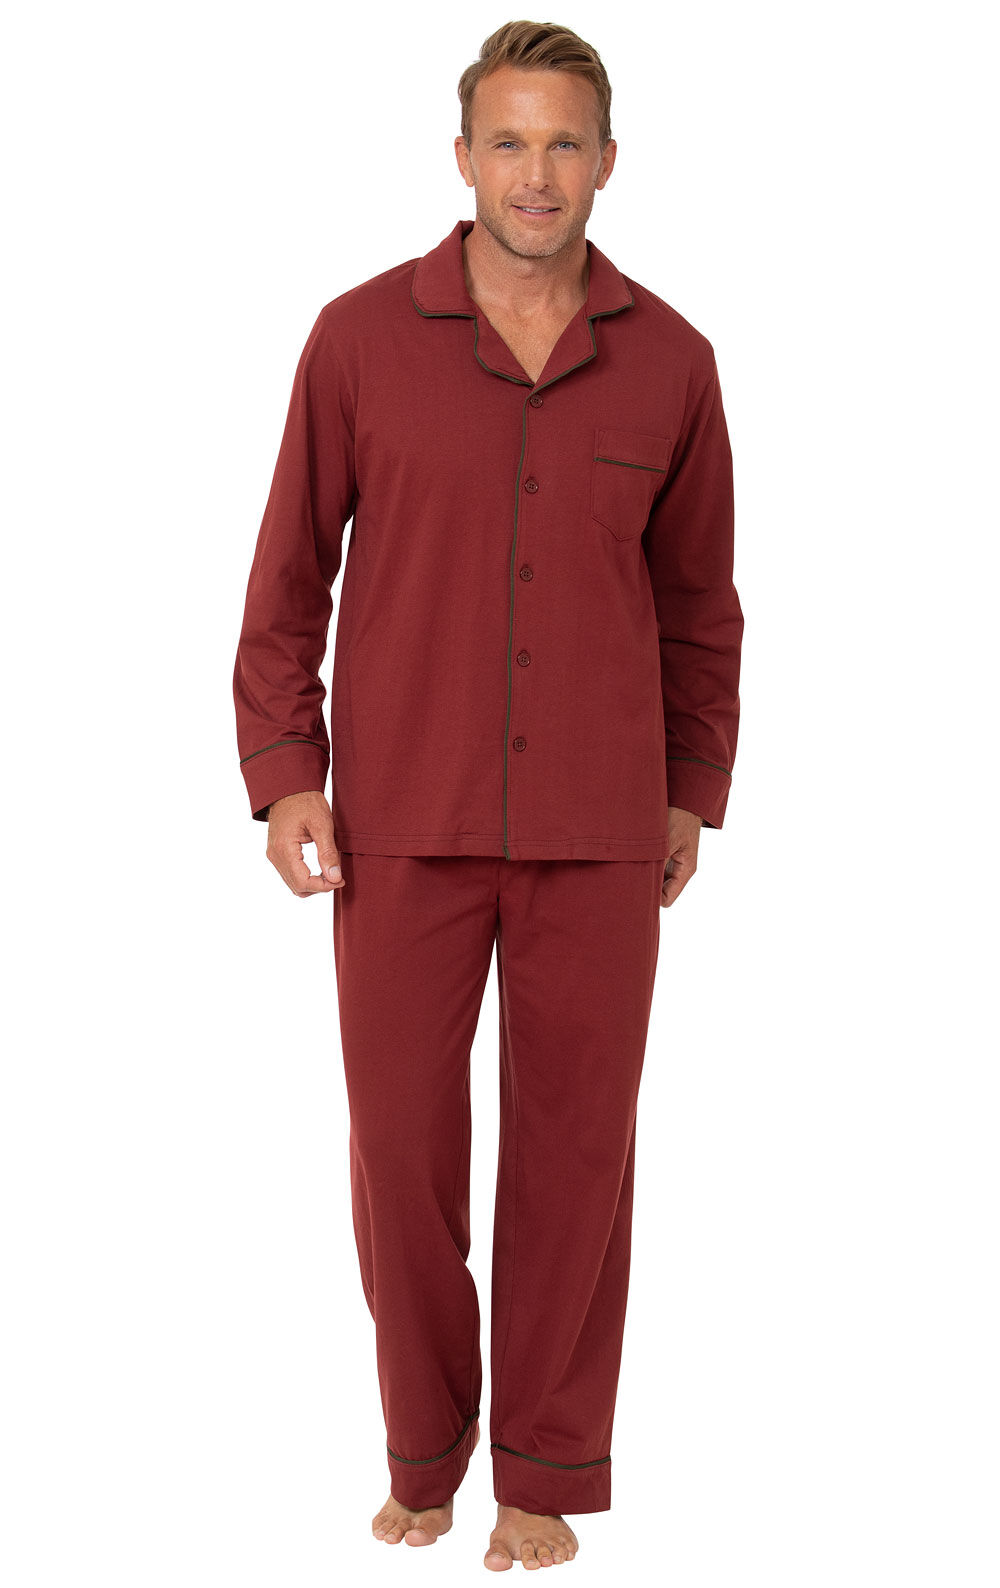 Men's Pajama Sets | Pajamas for Men | PajamaGram